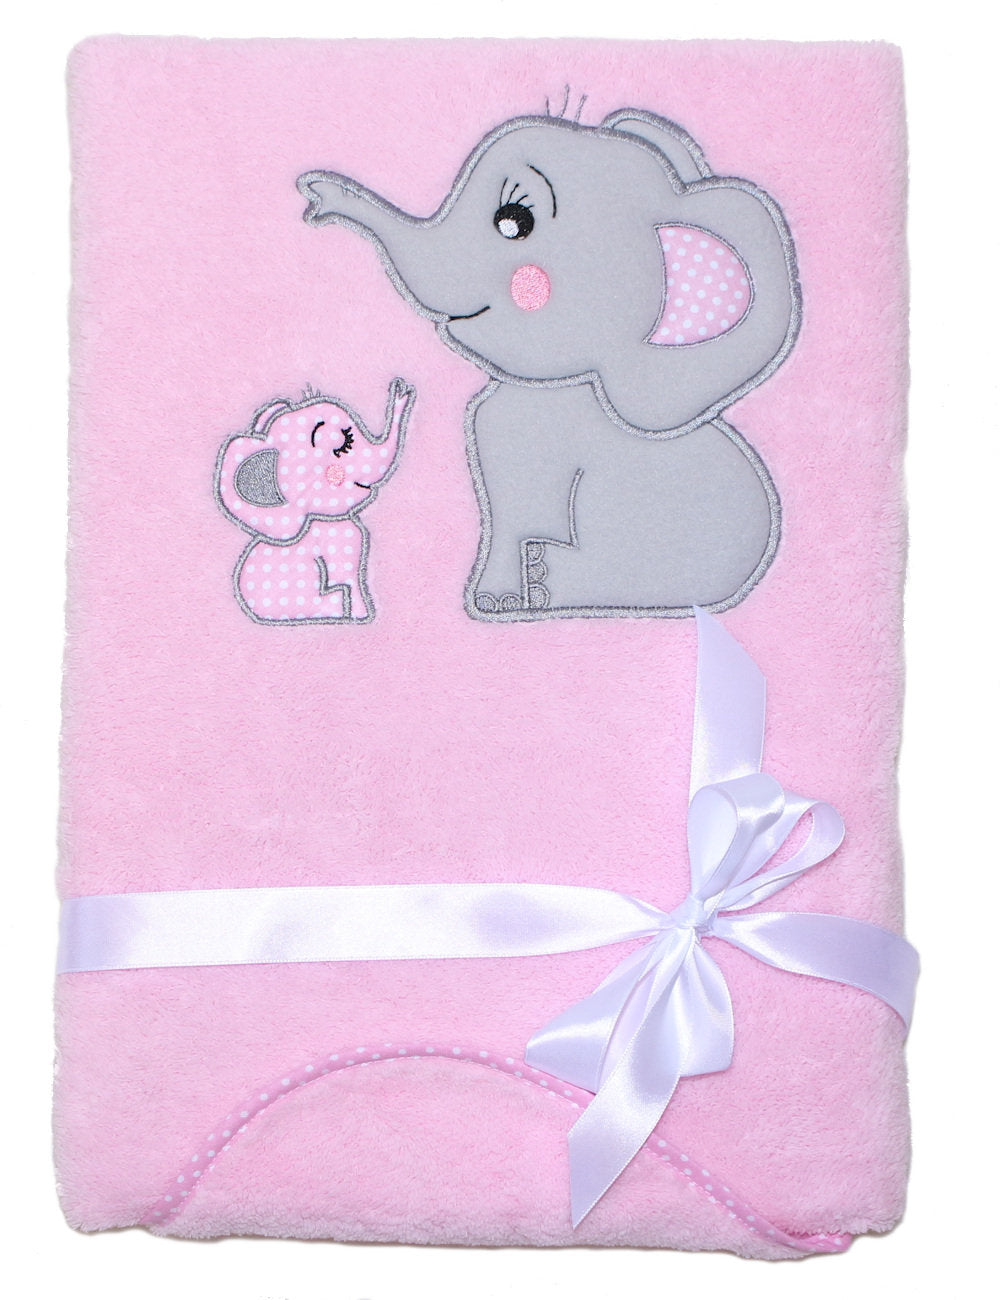 Babydecke mit Namen bestickt -Elefanten Rosa- – Kuscheldecke Primawela